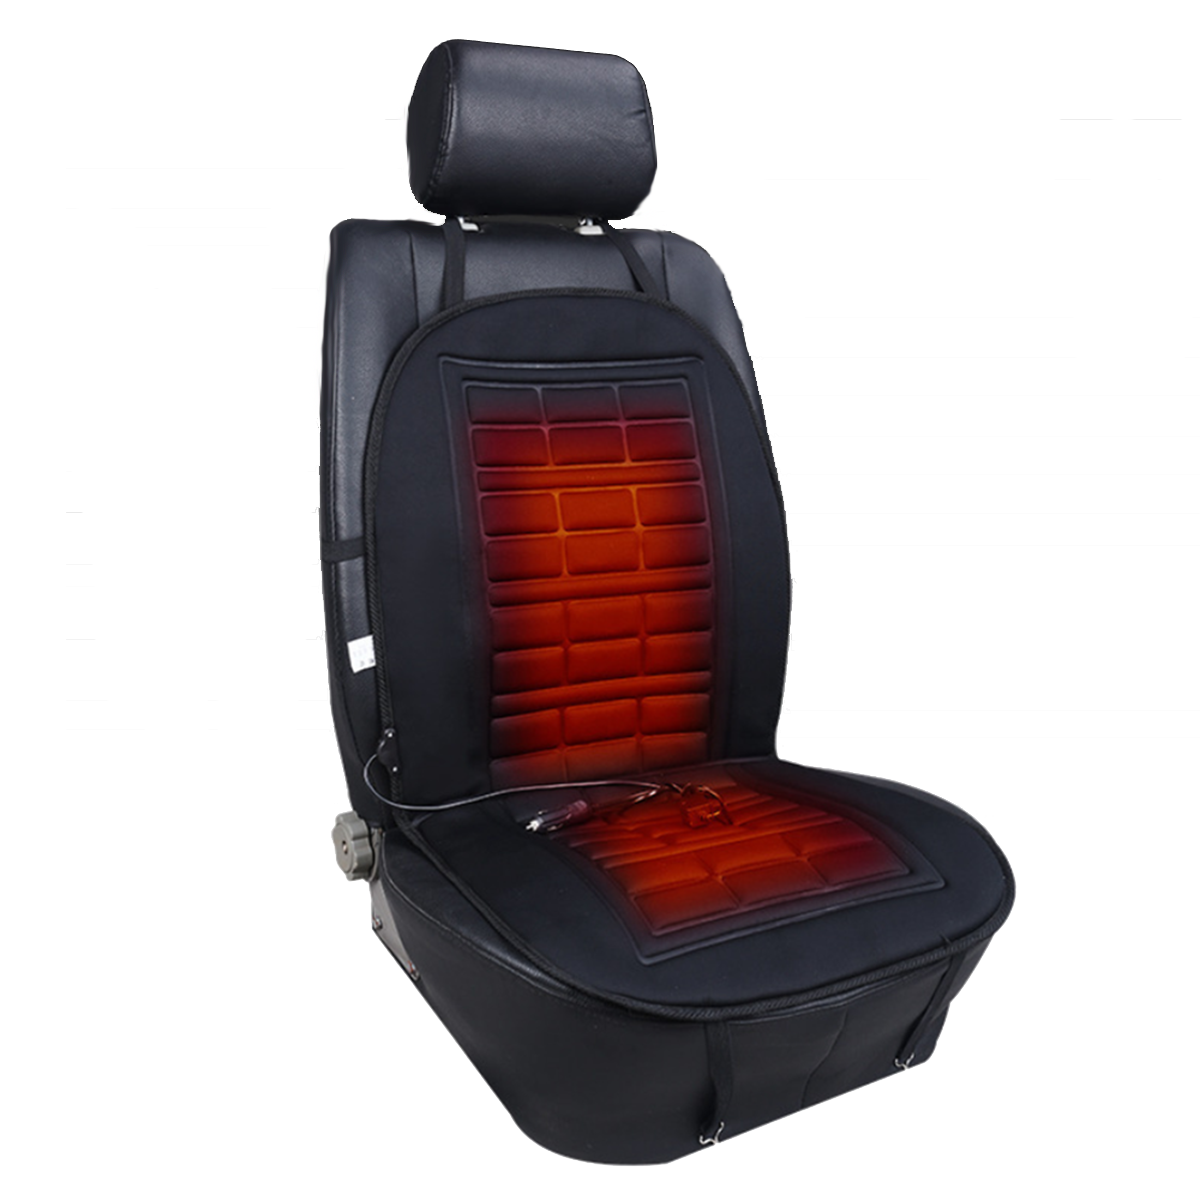 Auntwhale Auto 12V Car Front Seat Heated Cushion Hot Cover Plush Heater Winter Warmer Pad Cushion Black 